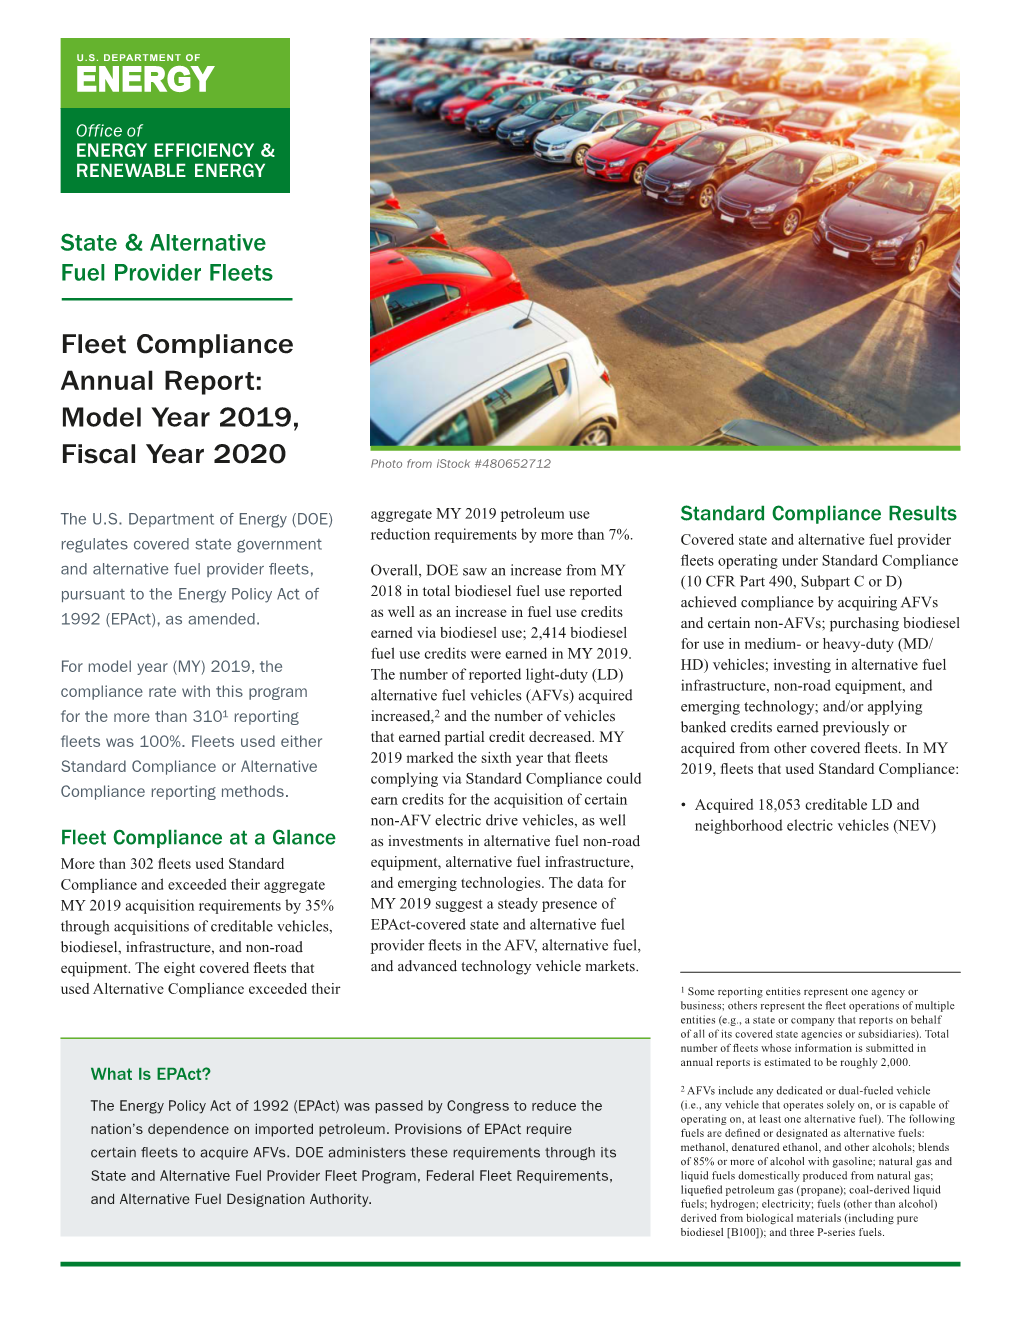 Fleet Compliance Annual Report: Model Year 2019